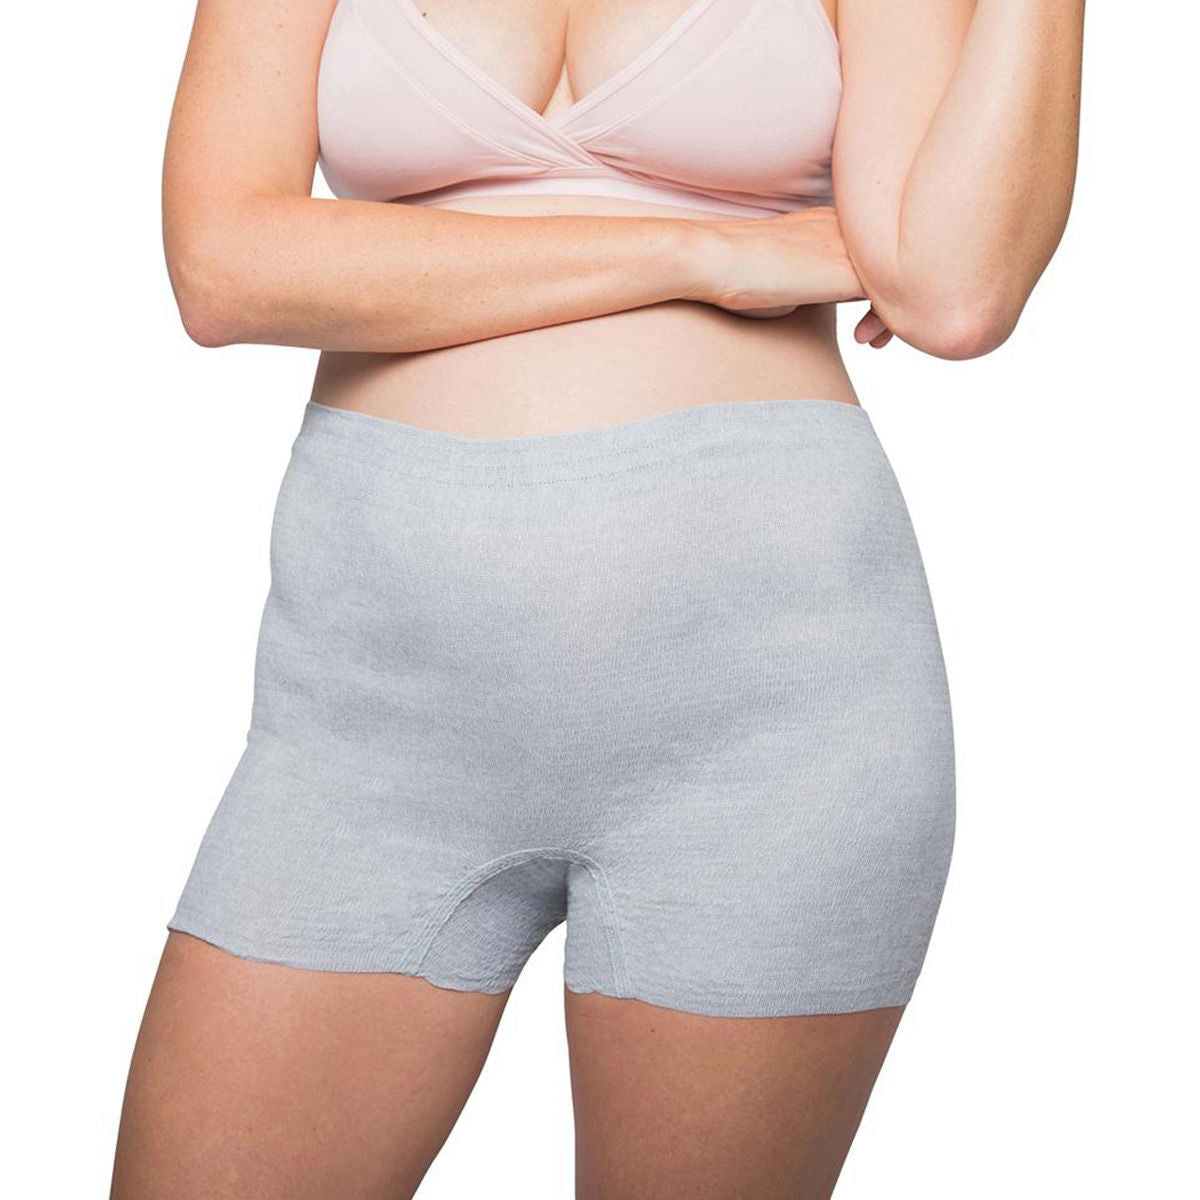 Frida Mom Disposable Postpartum Underwear